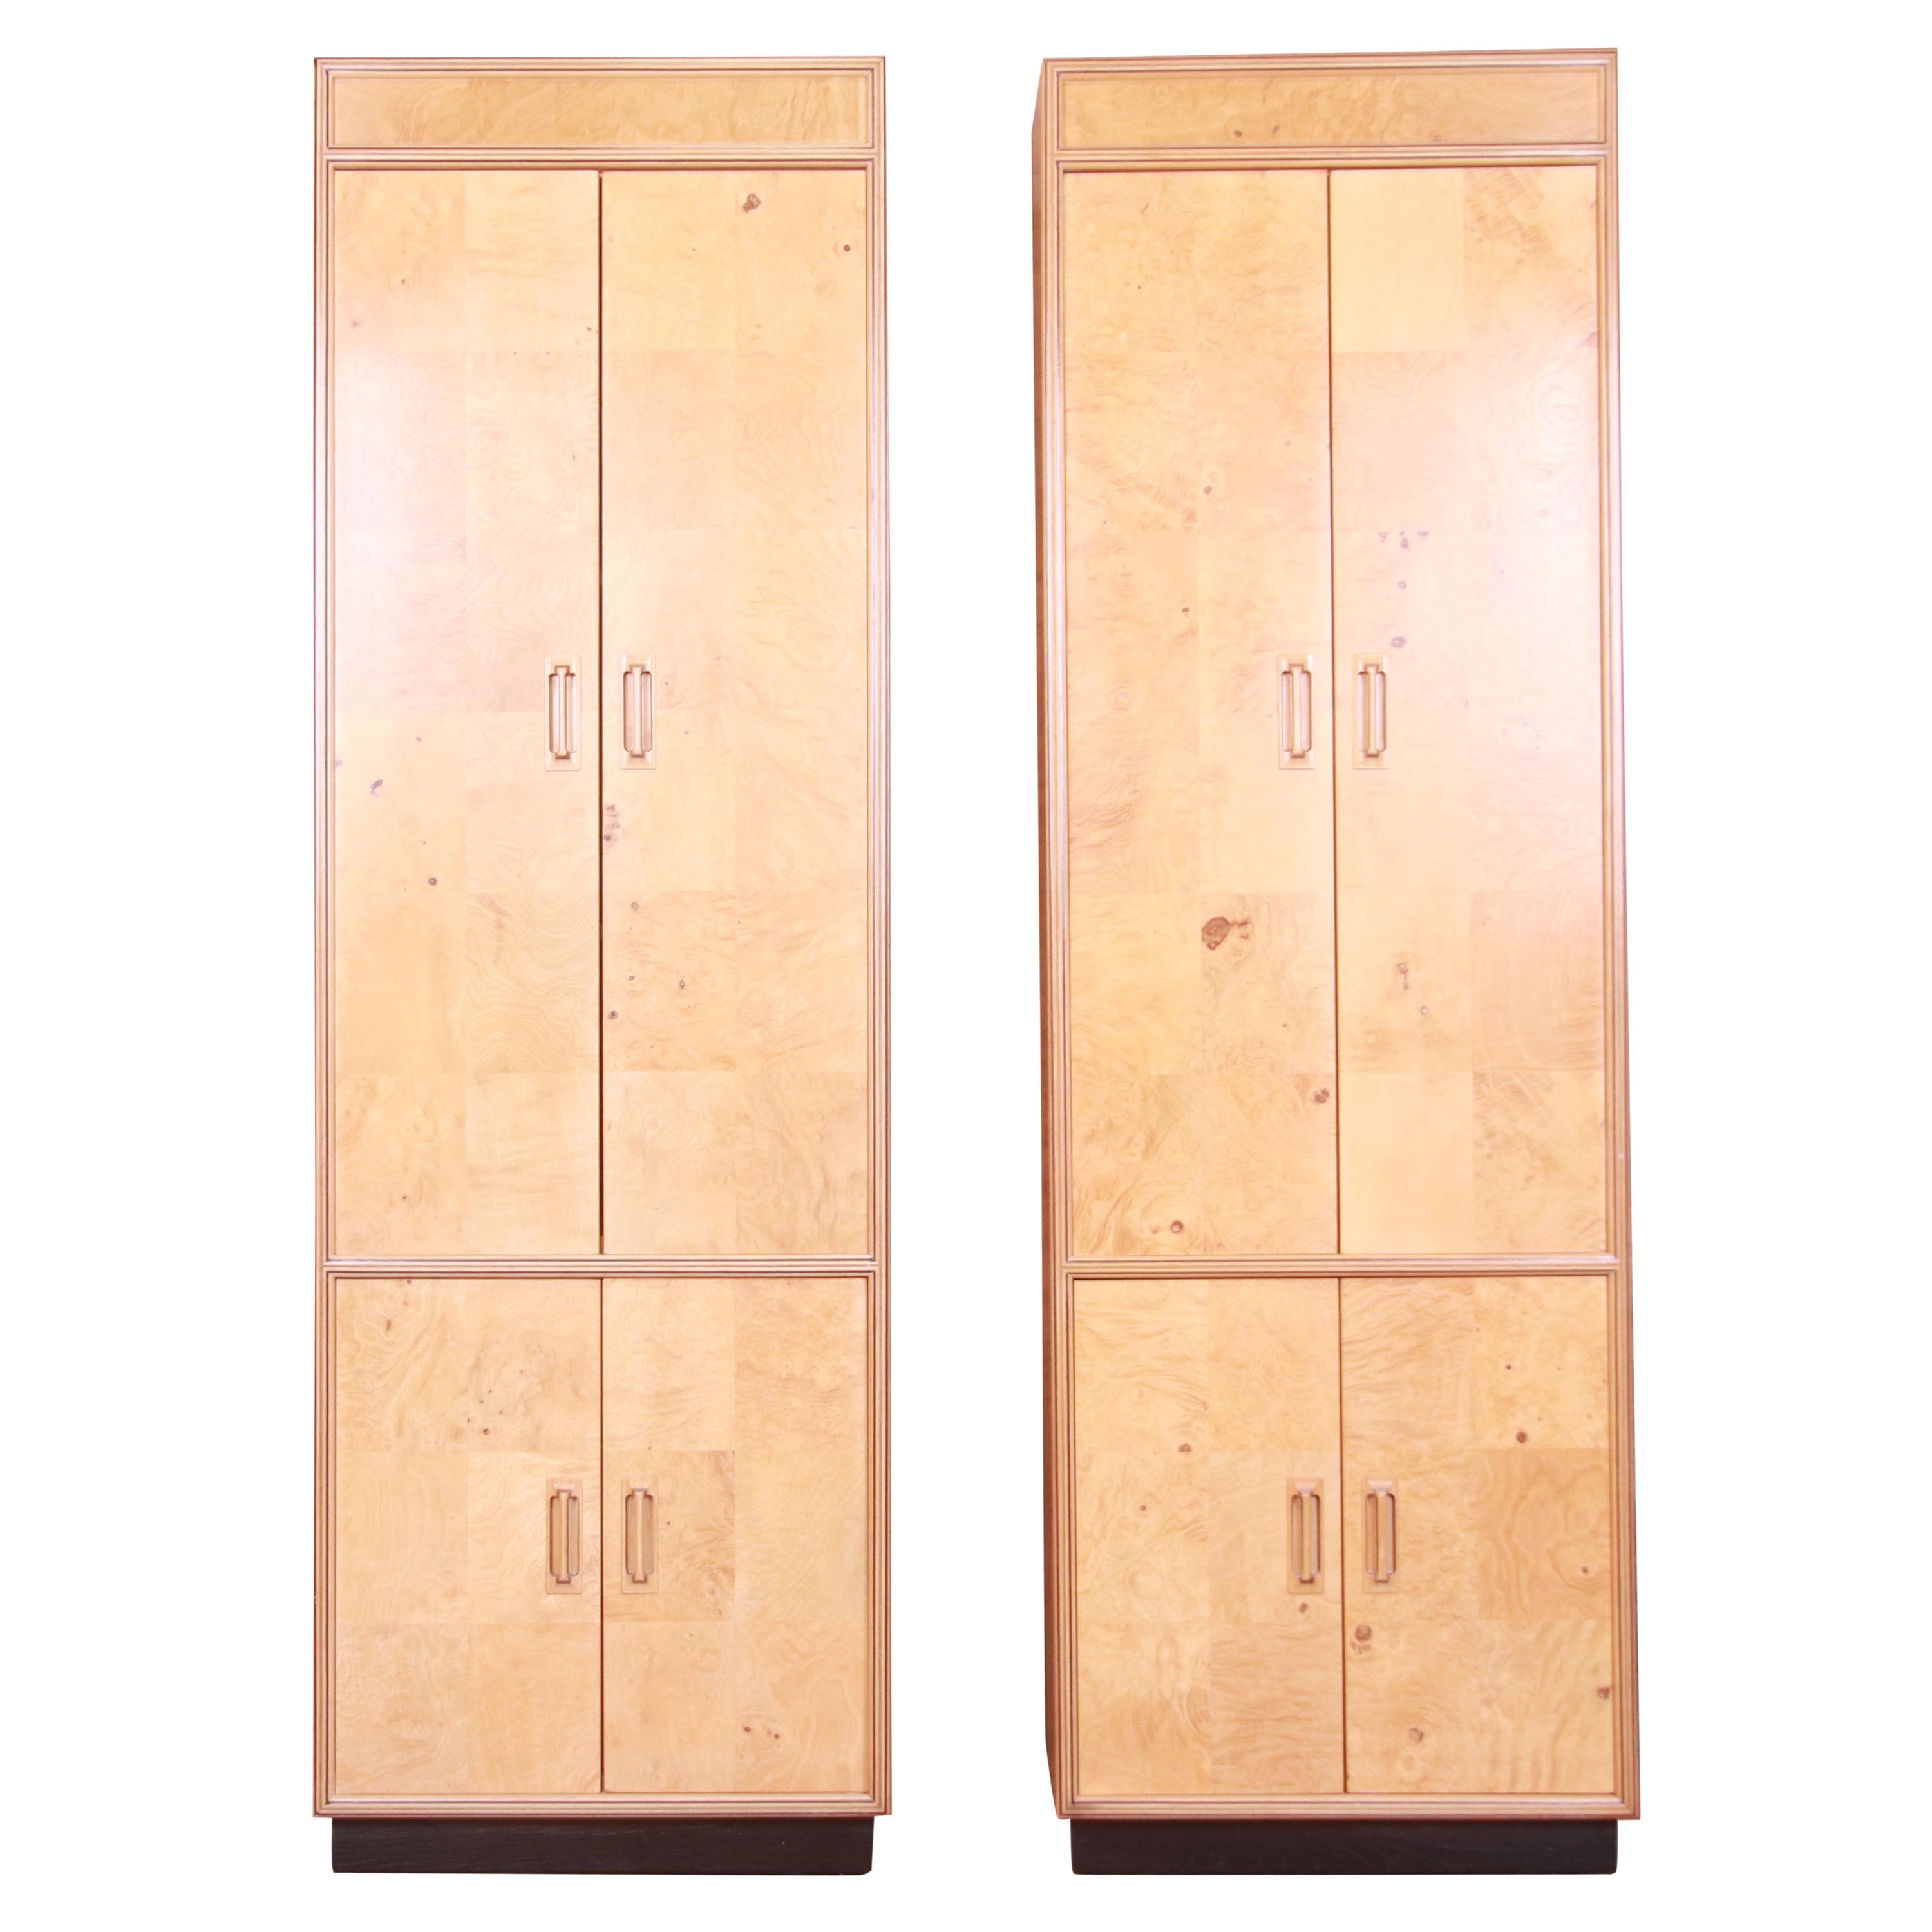 Milo Baughman Style Burl Wood Armoire Dressers by Henredon, Pair